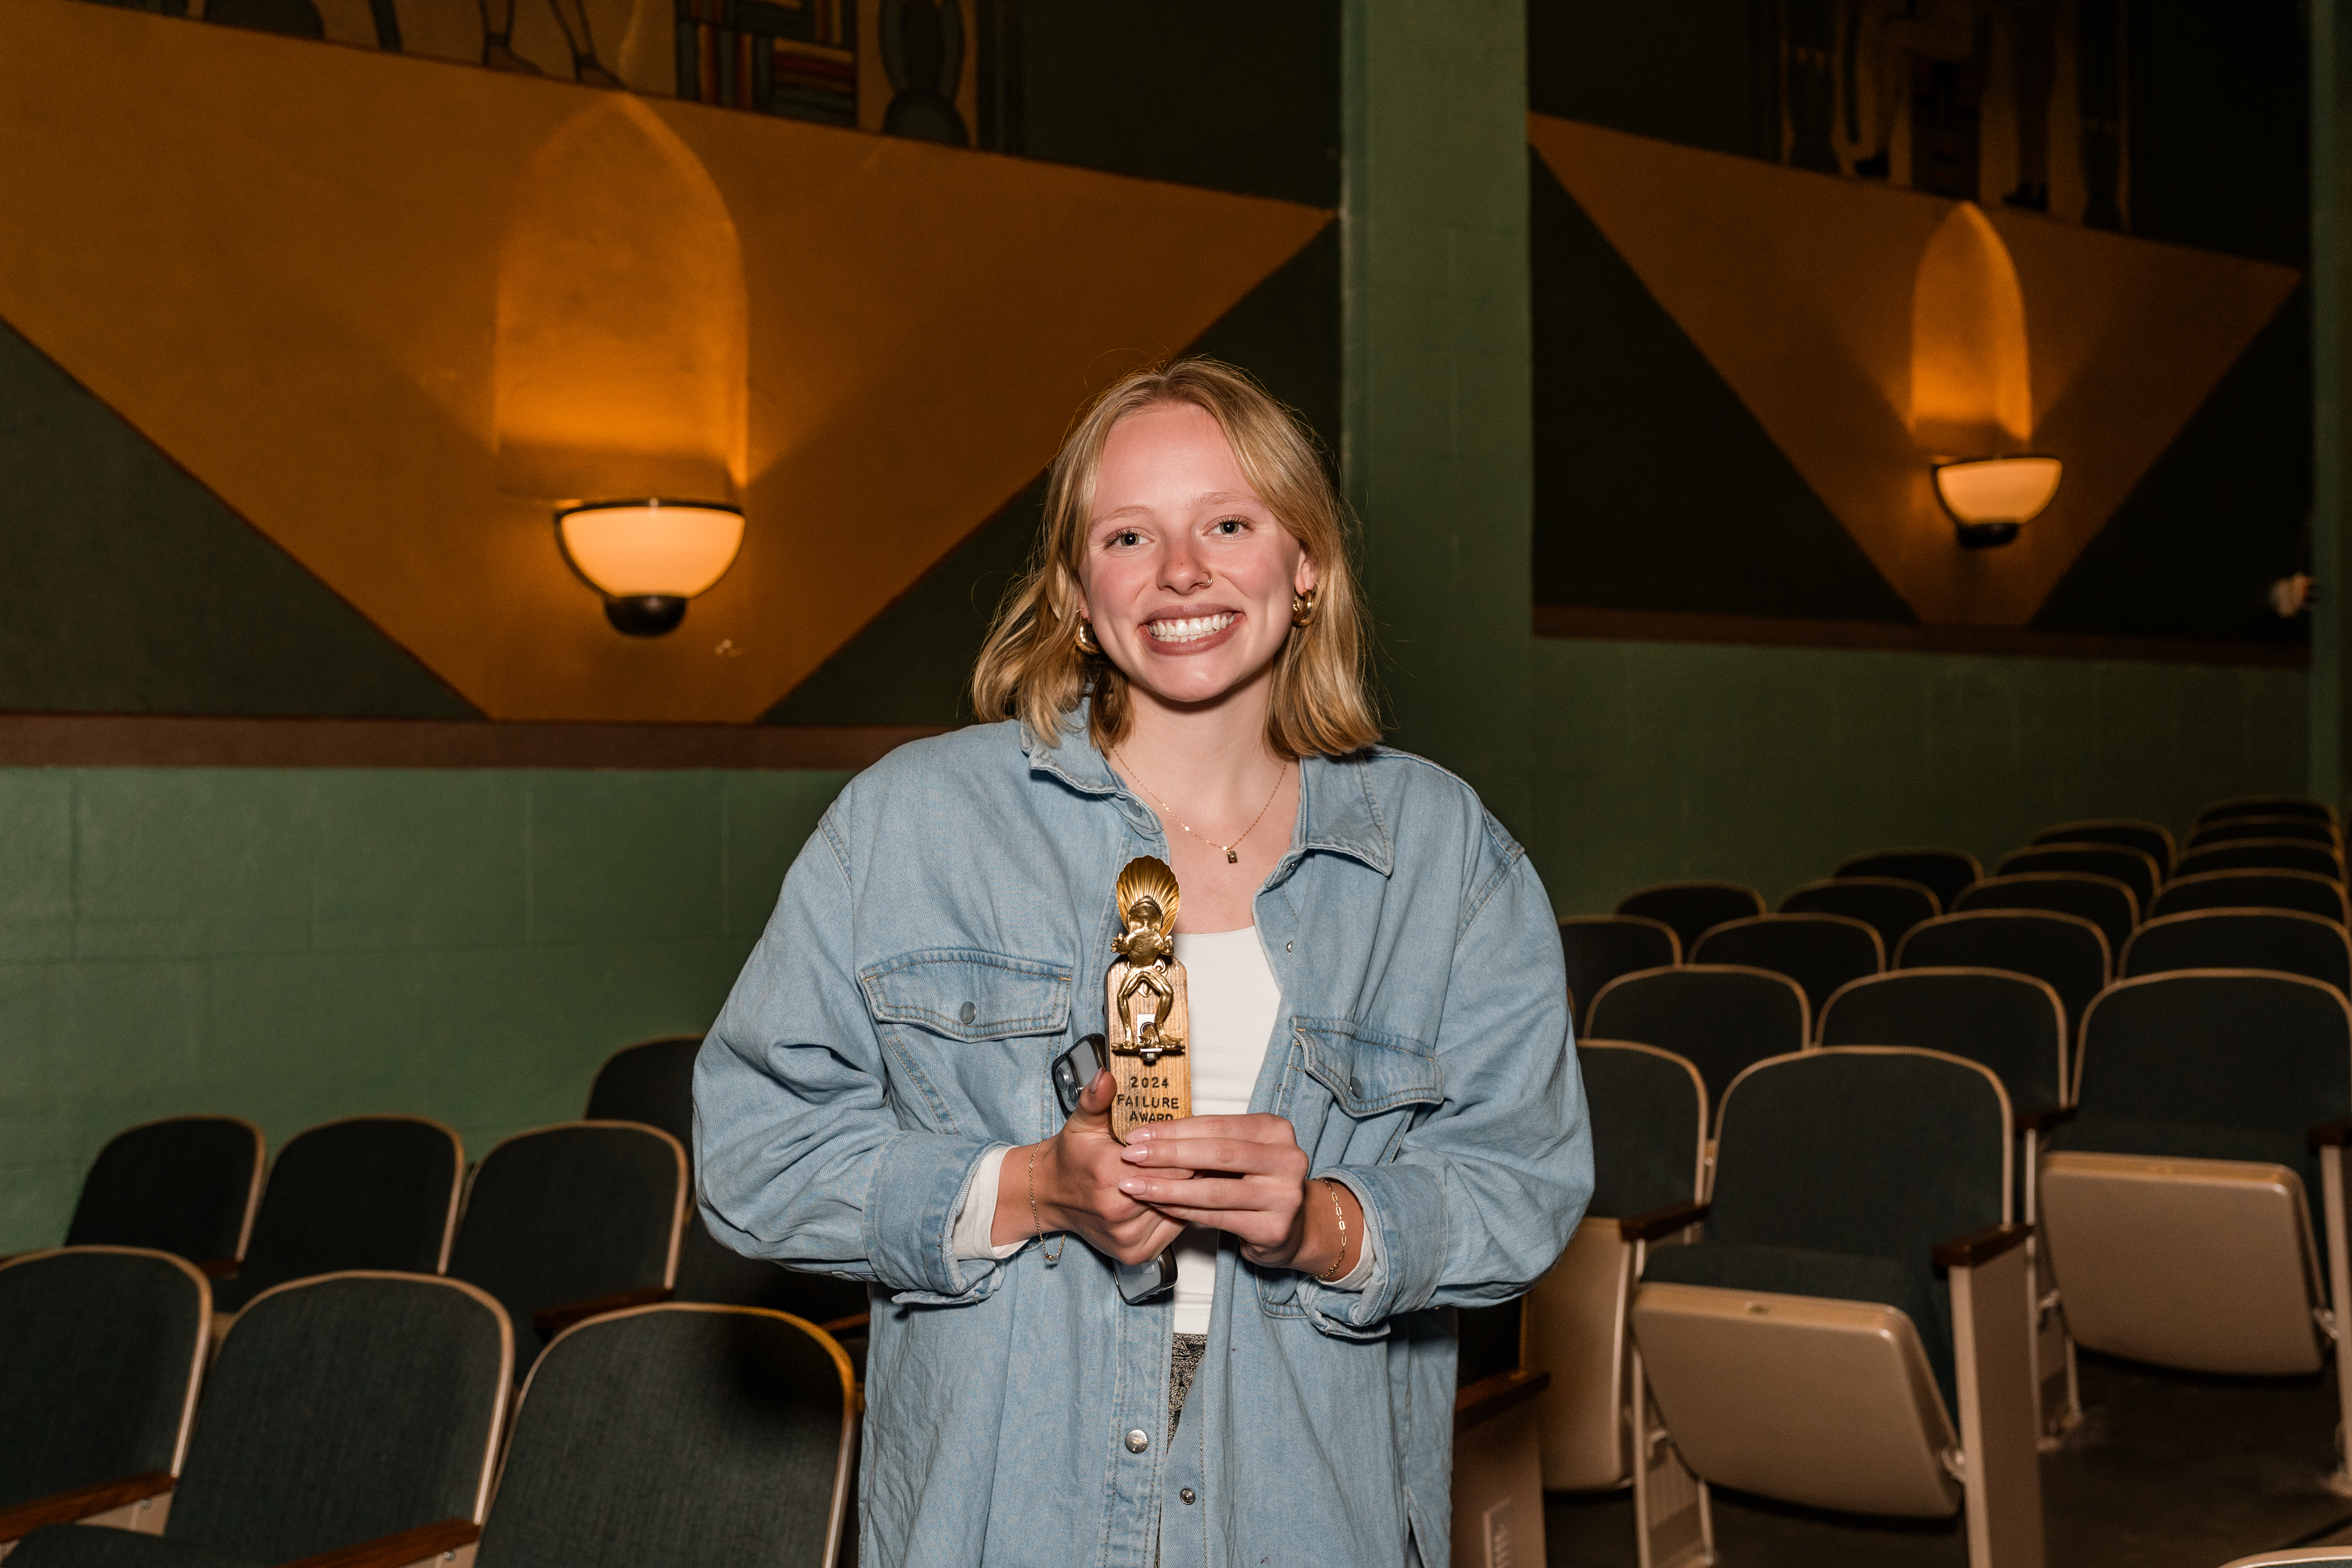 High school senior Josie Wilson holding a trophy in a theater.